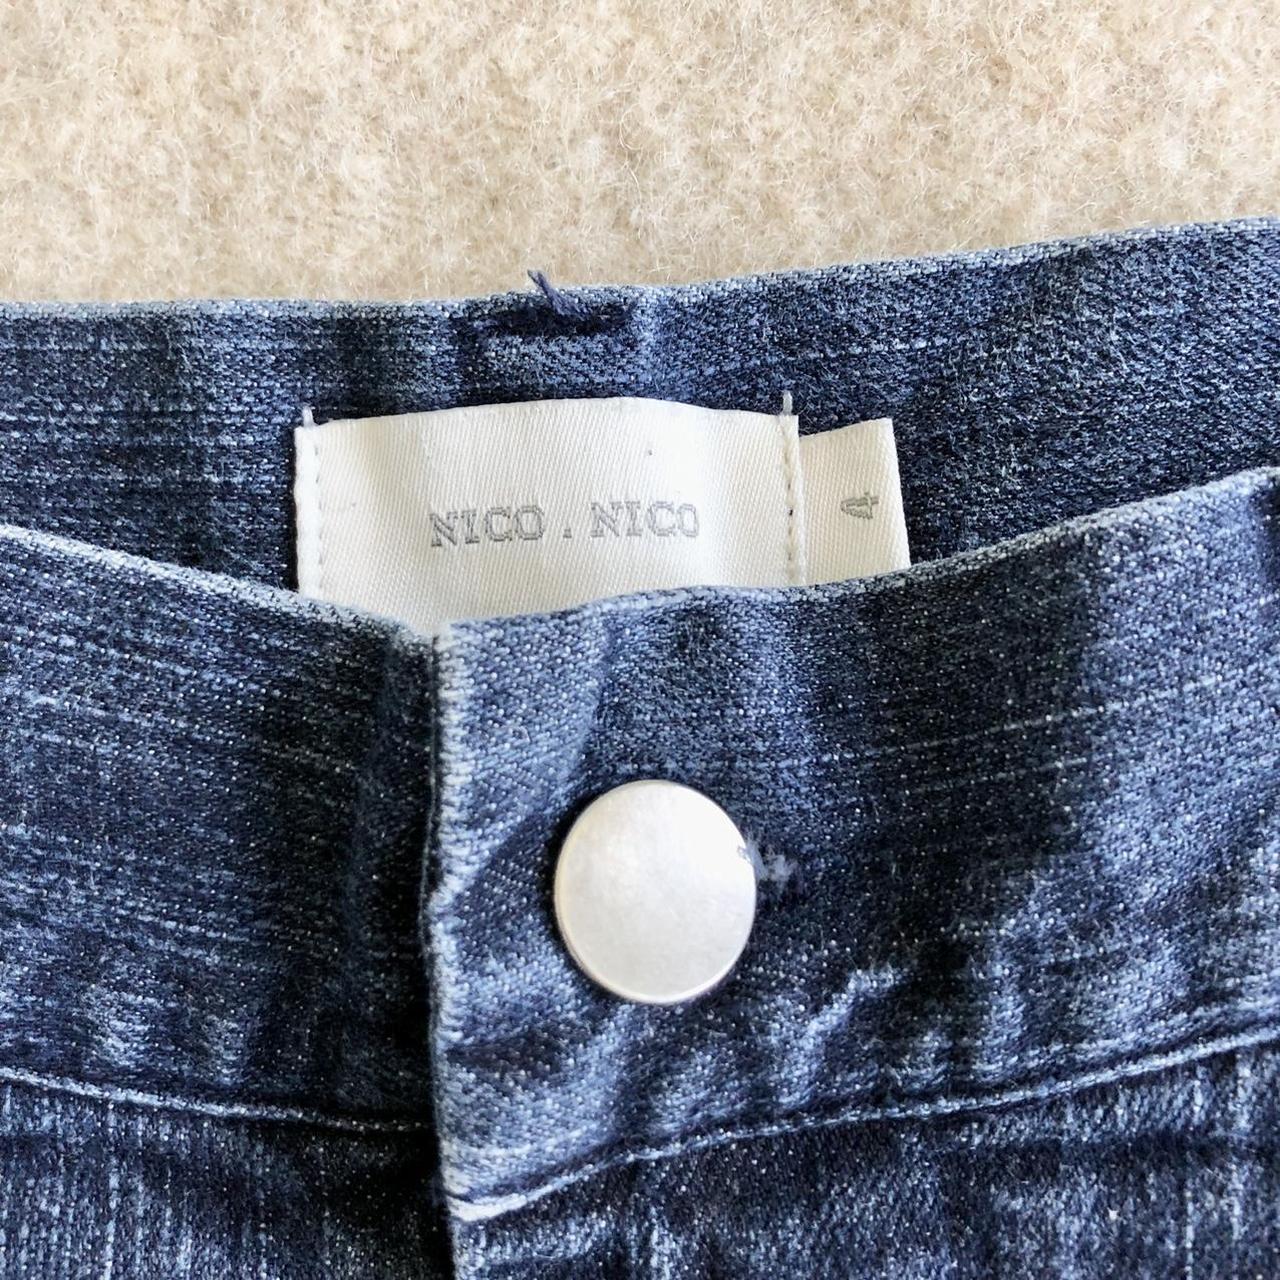 NICO NICO Solar high waisted jeans! Features a true... - Depop